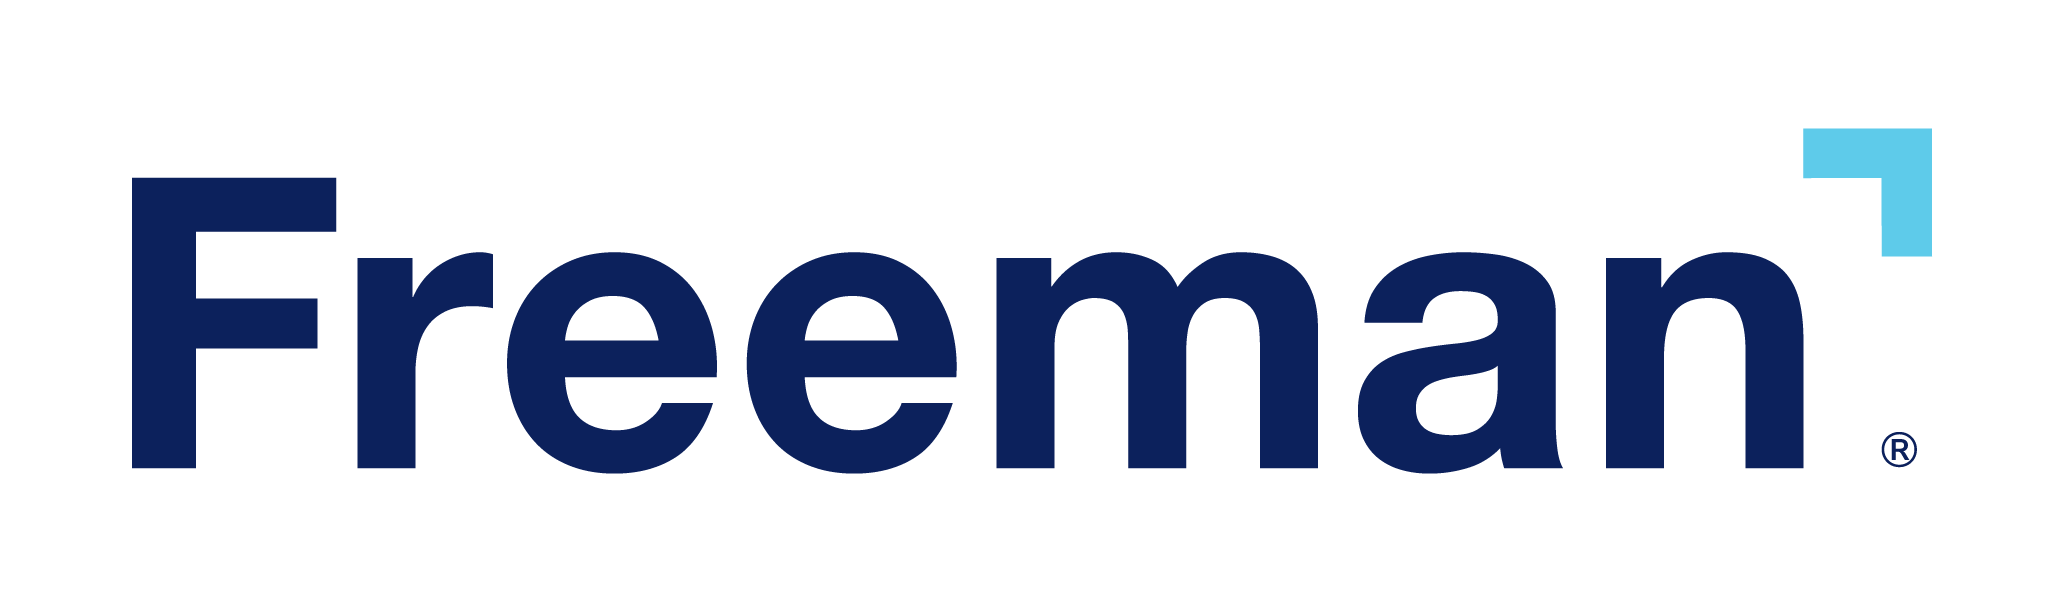 Freeman-logo_primary-standard_CMYK (1) (1)